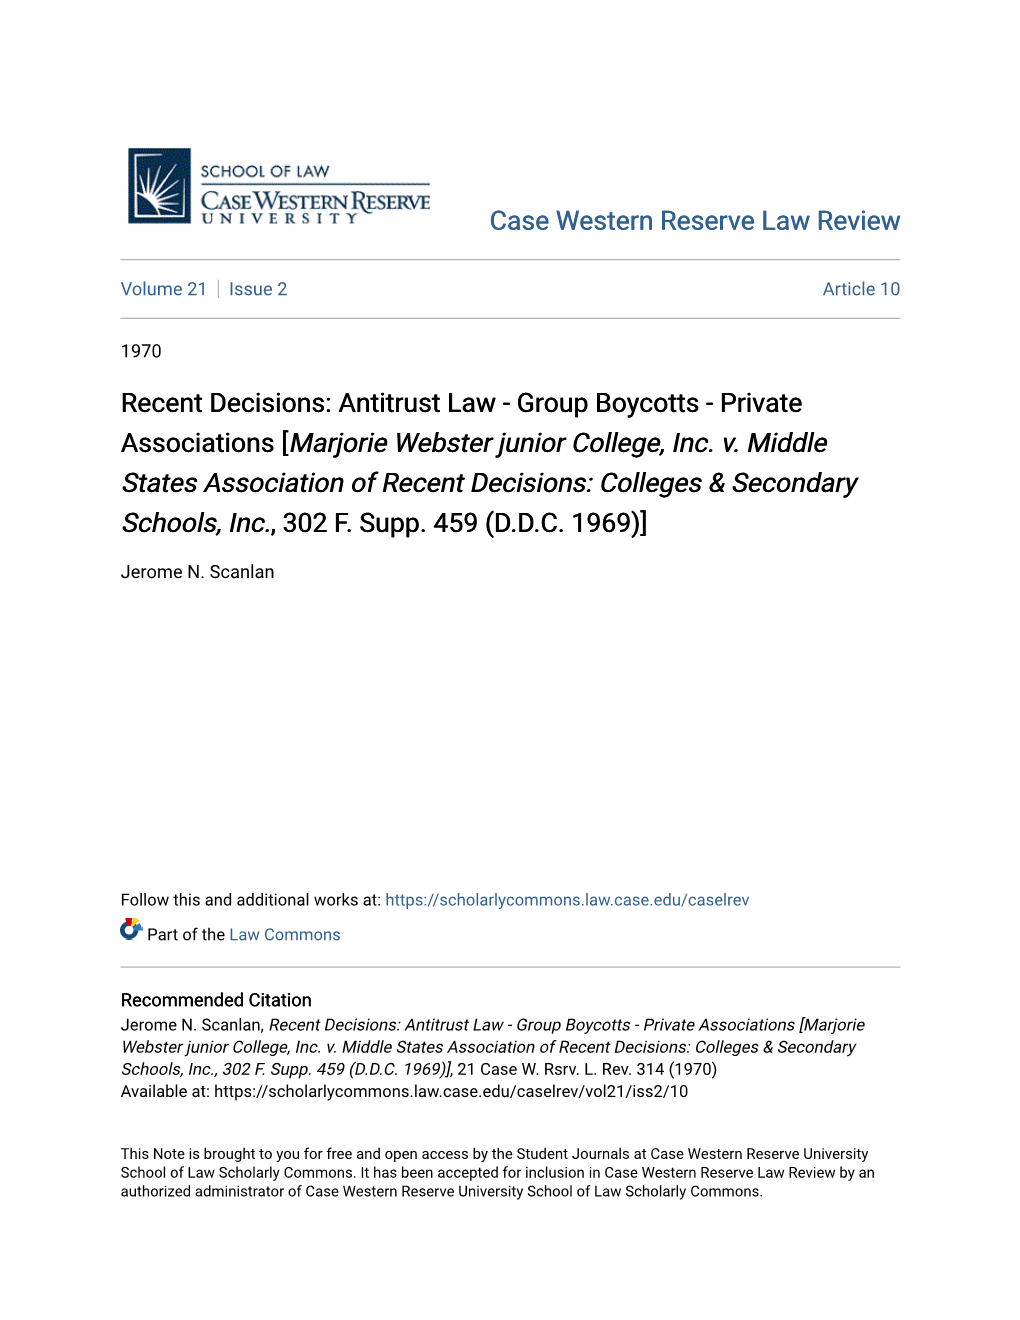 Antitrust Law - Group Boycotts - Private Associations [Marjorie Webster Junior College, Inc